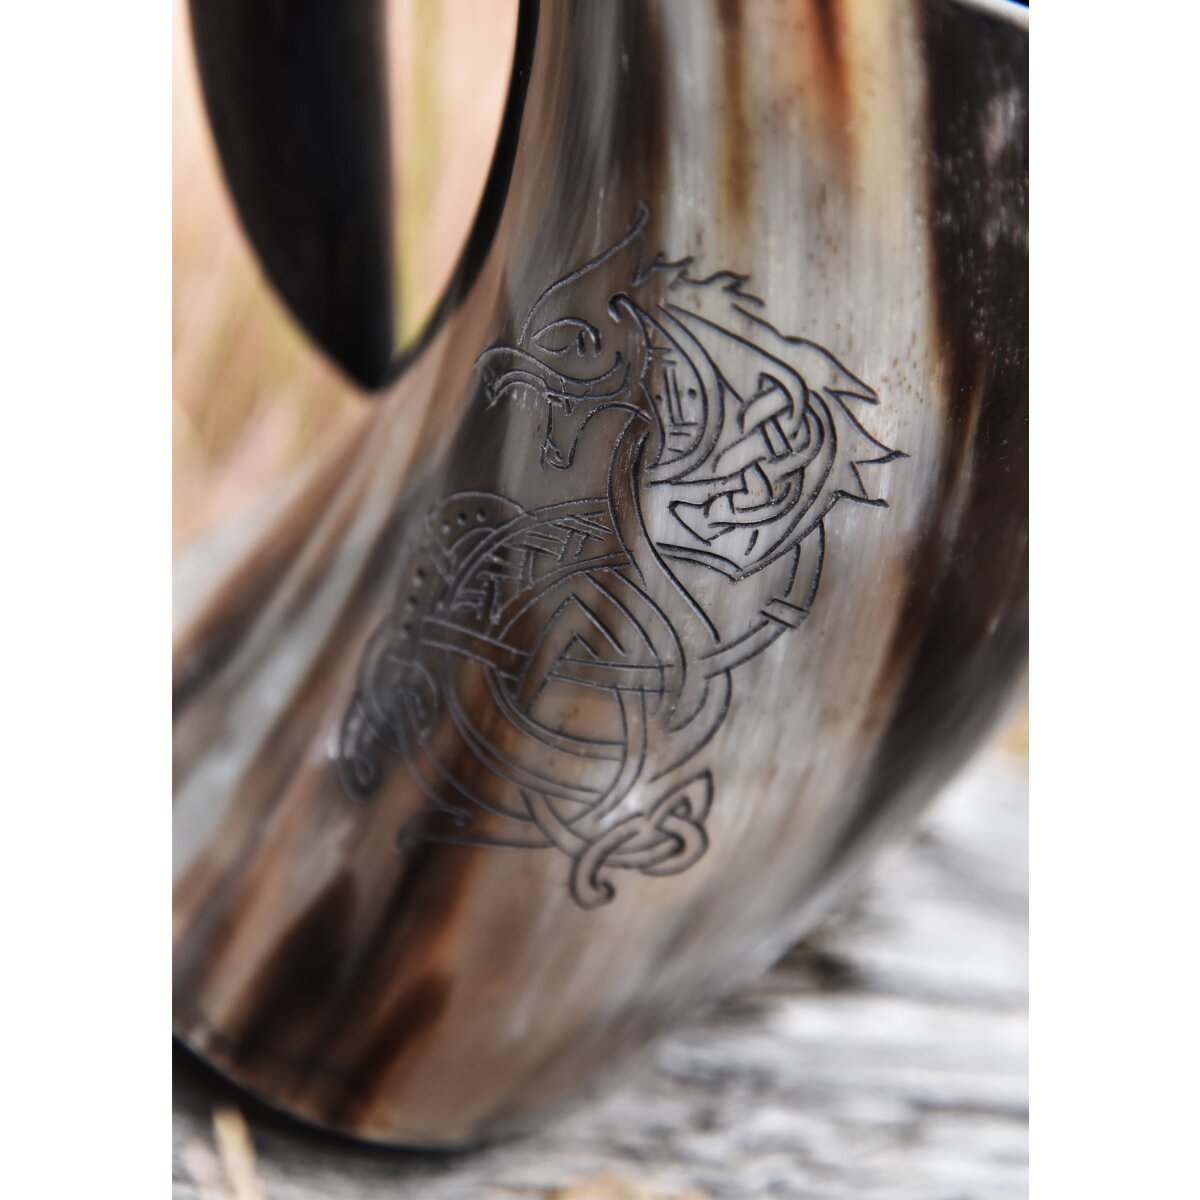 Beer mug made of horn - "Fenrir, the Nordic wolf"